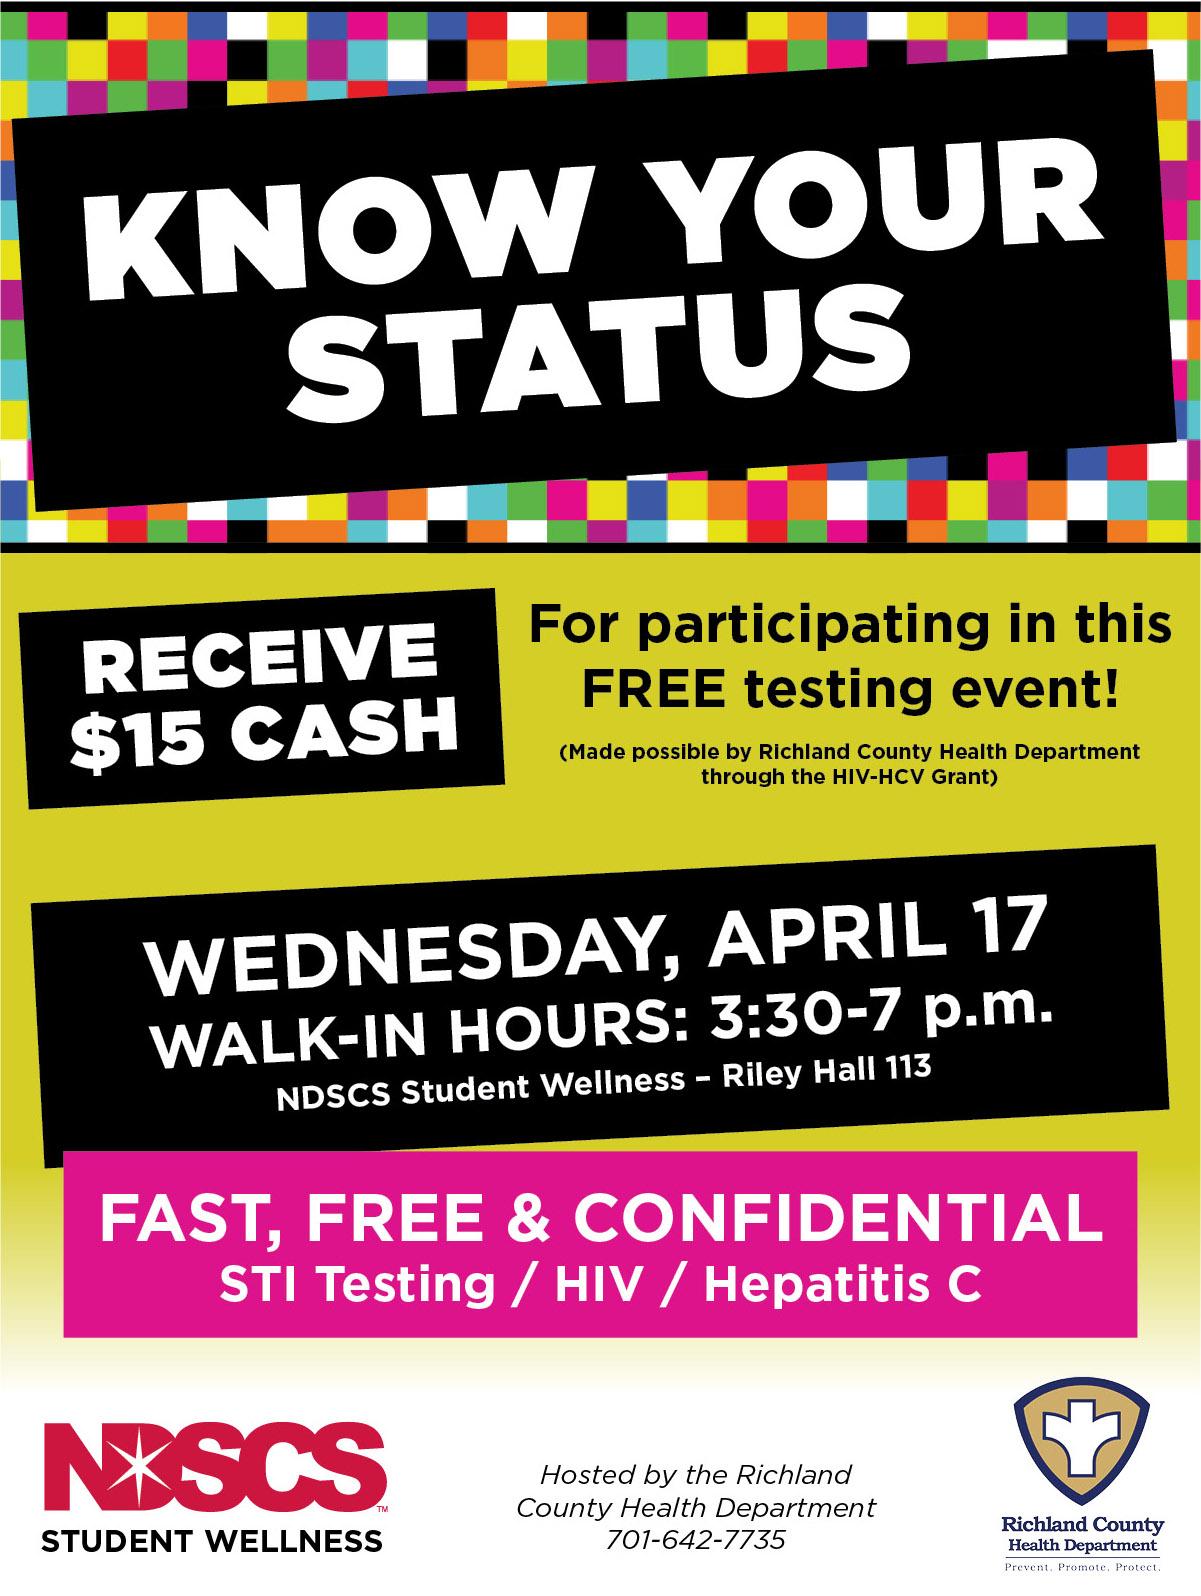 STI/HIV/Hepatitis C Testing Event